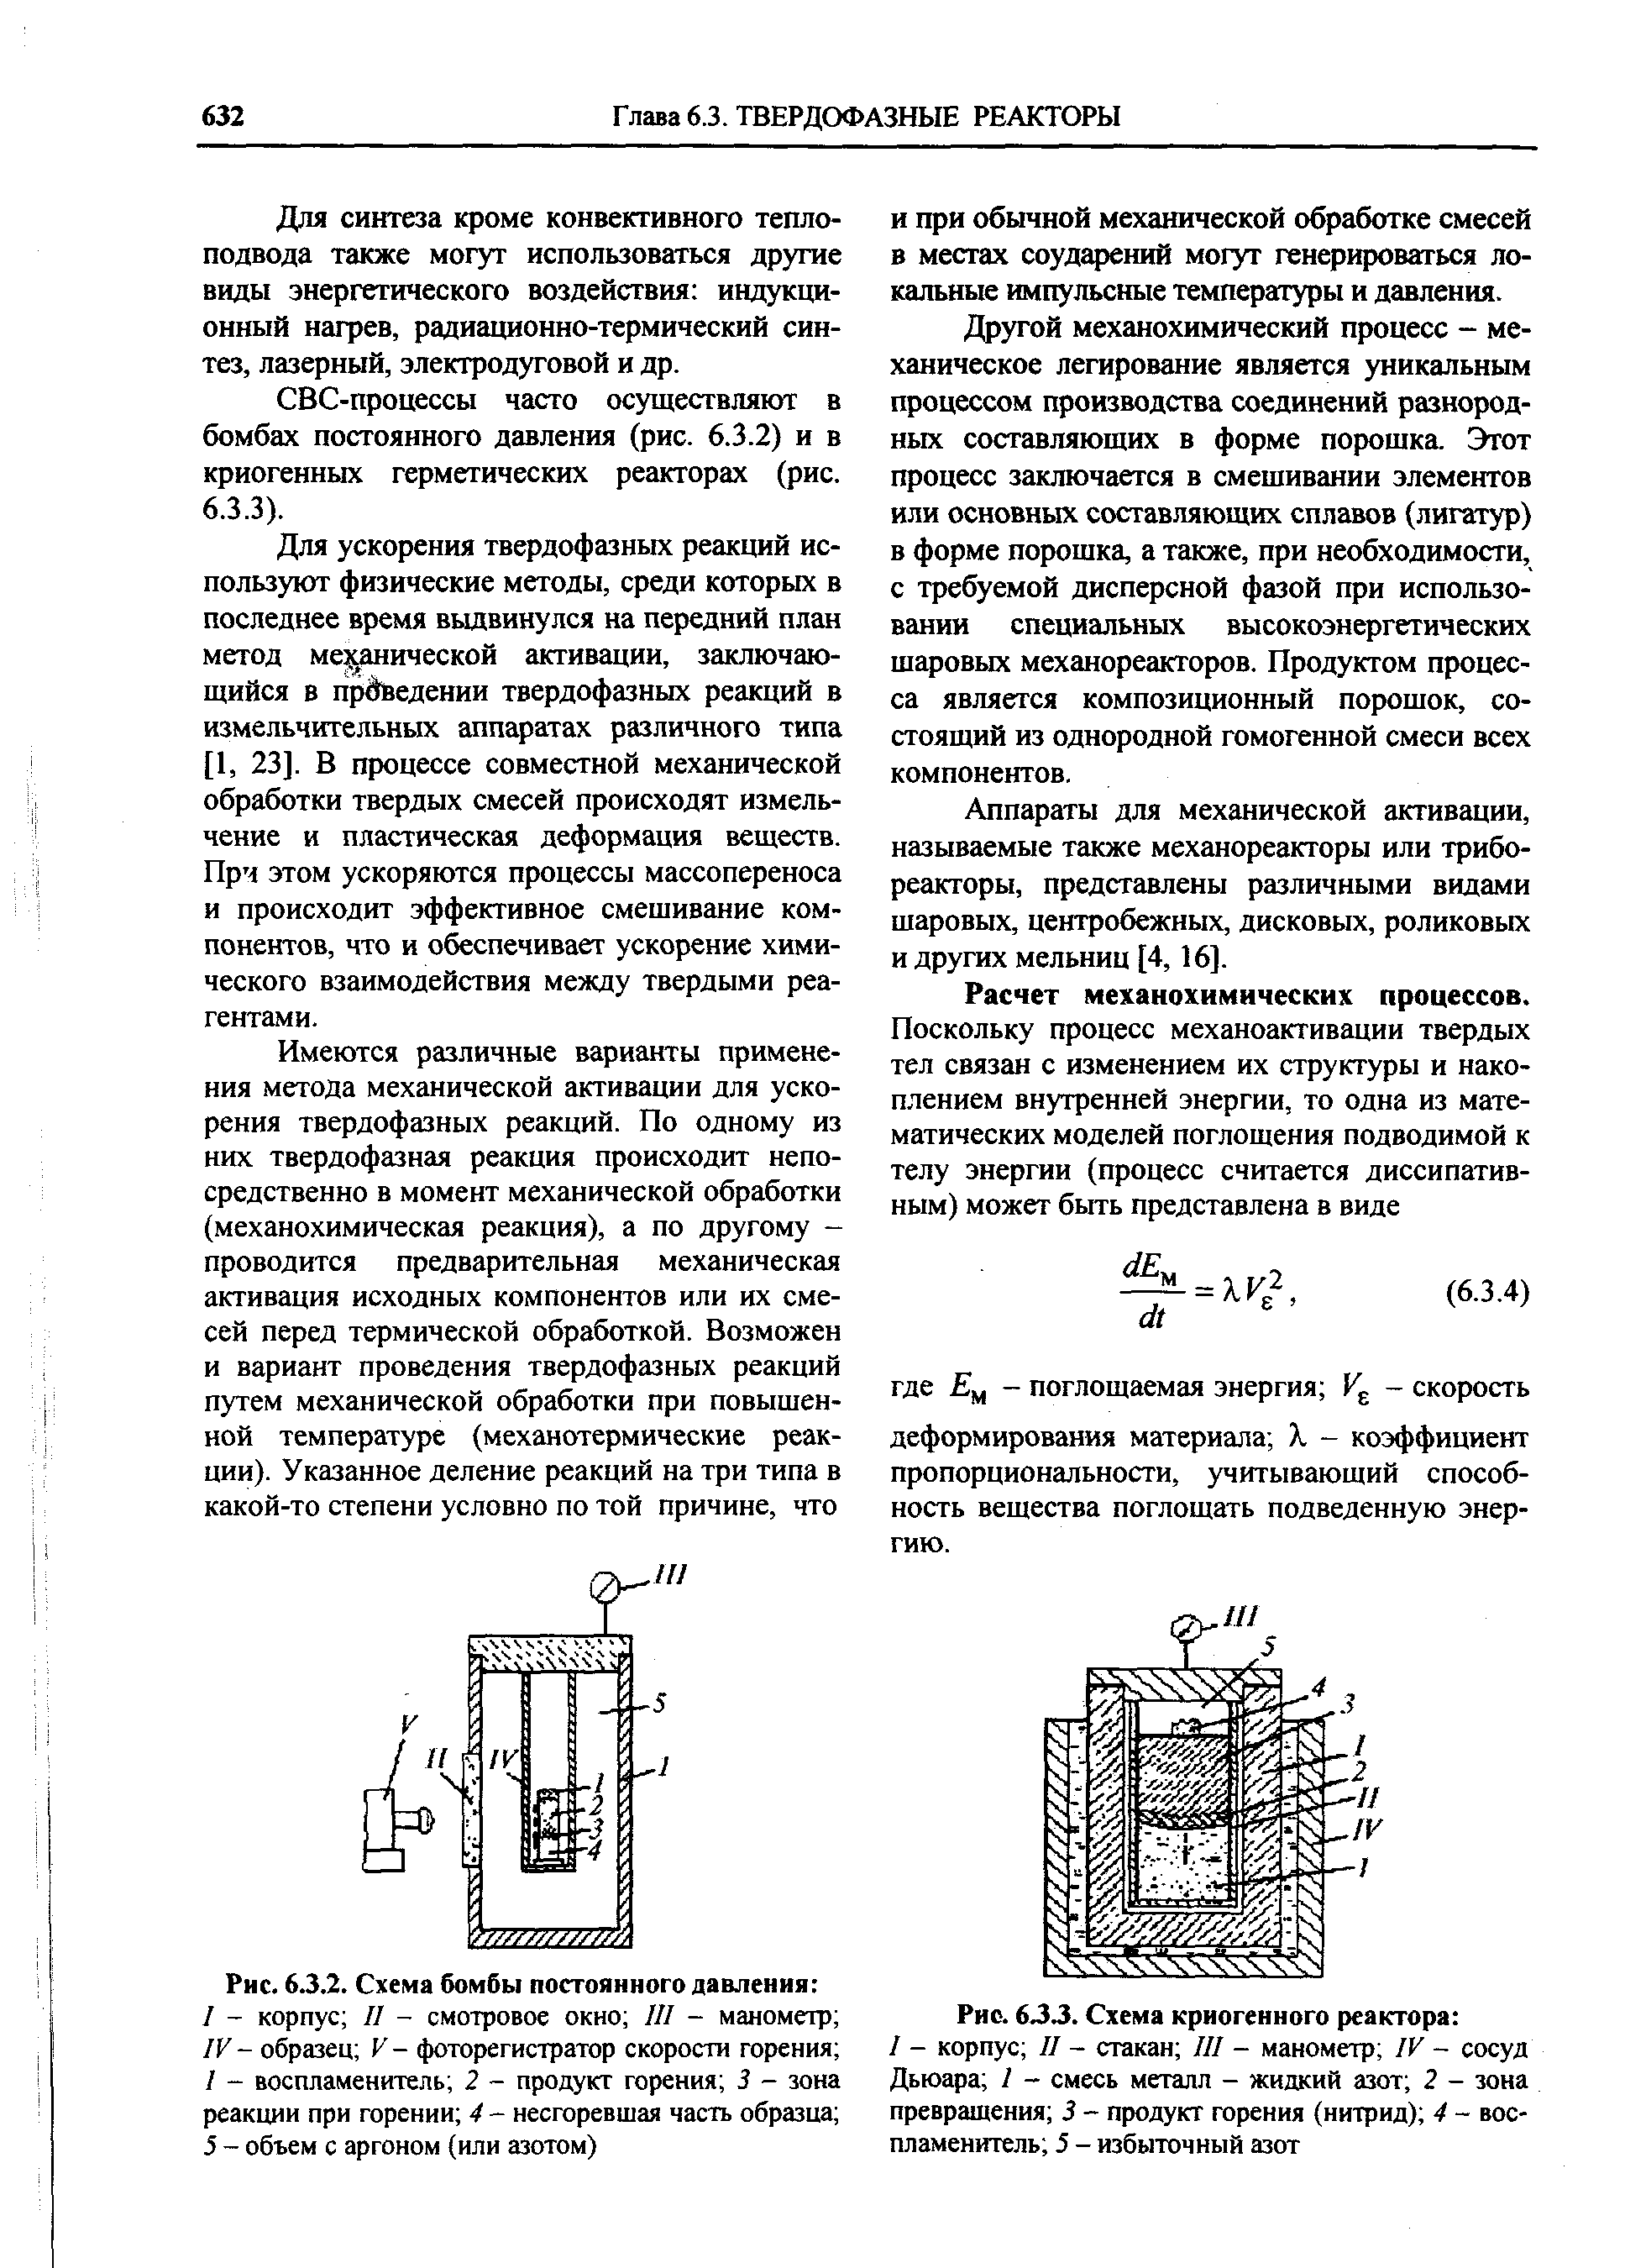 Рис. 633. Схема криогенного реактора 
